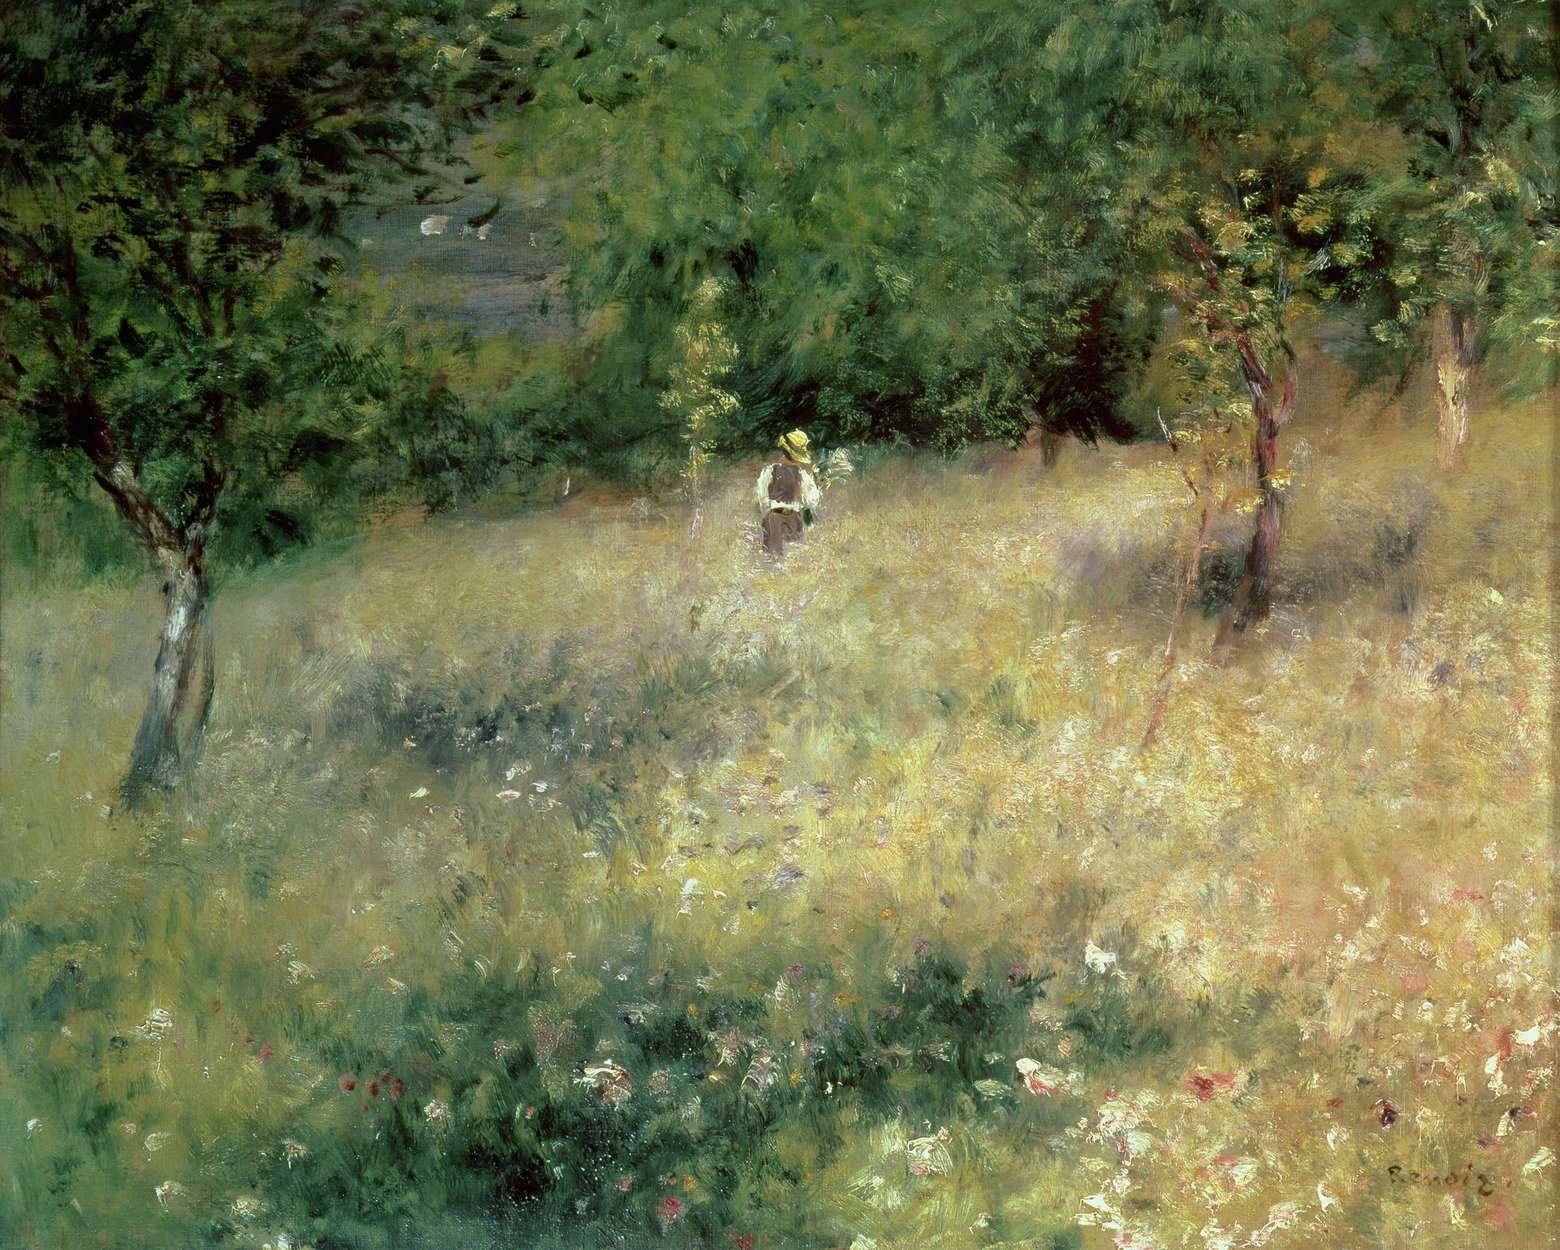             Fototapete "Frühling in Chatou" von Pierre Auguste Renoir
        